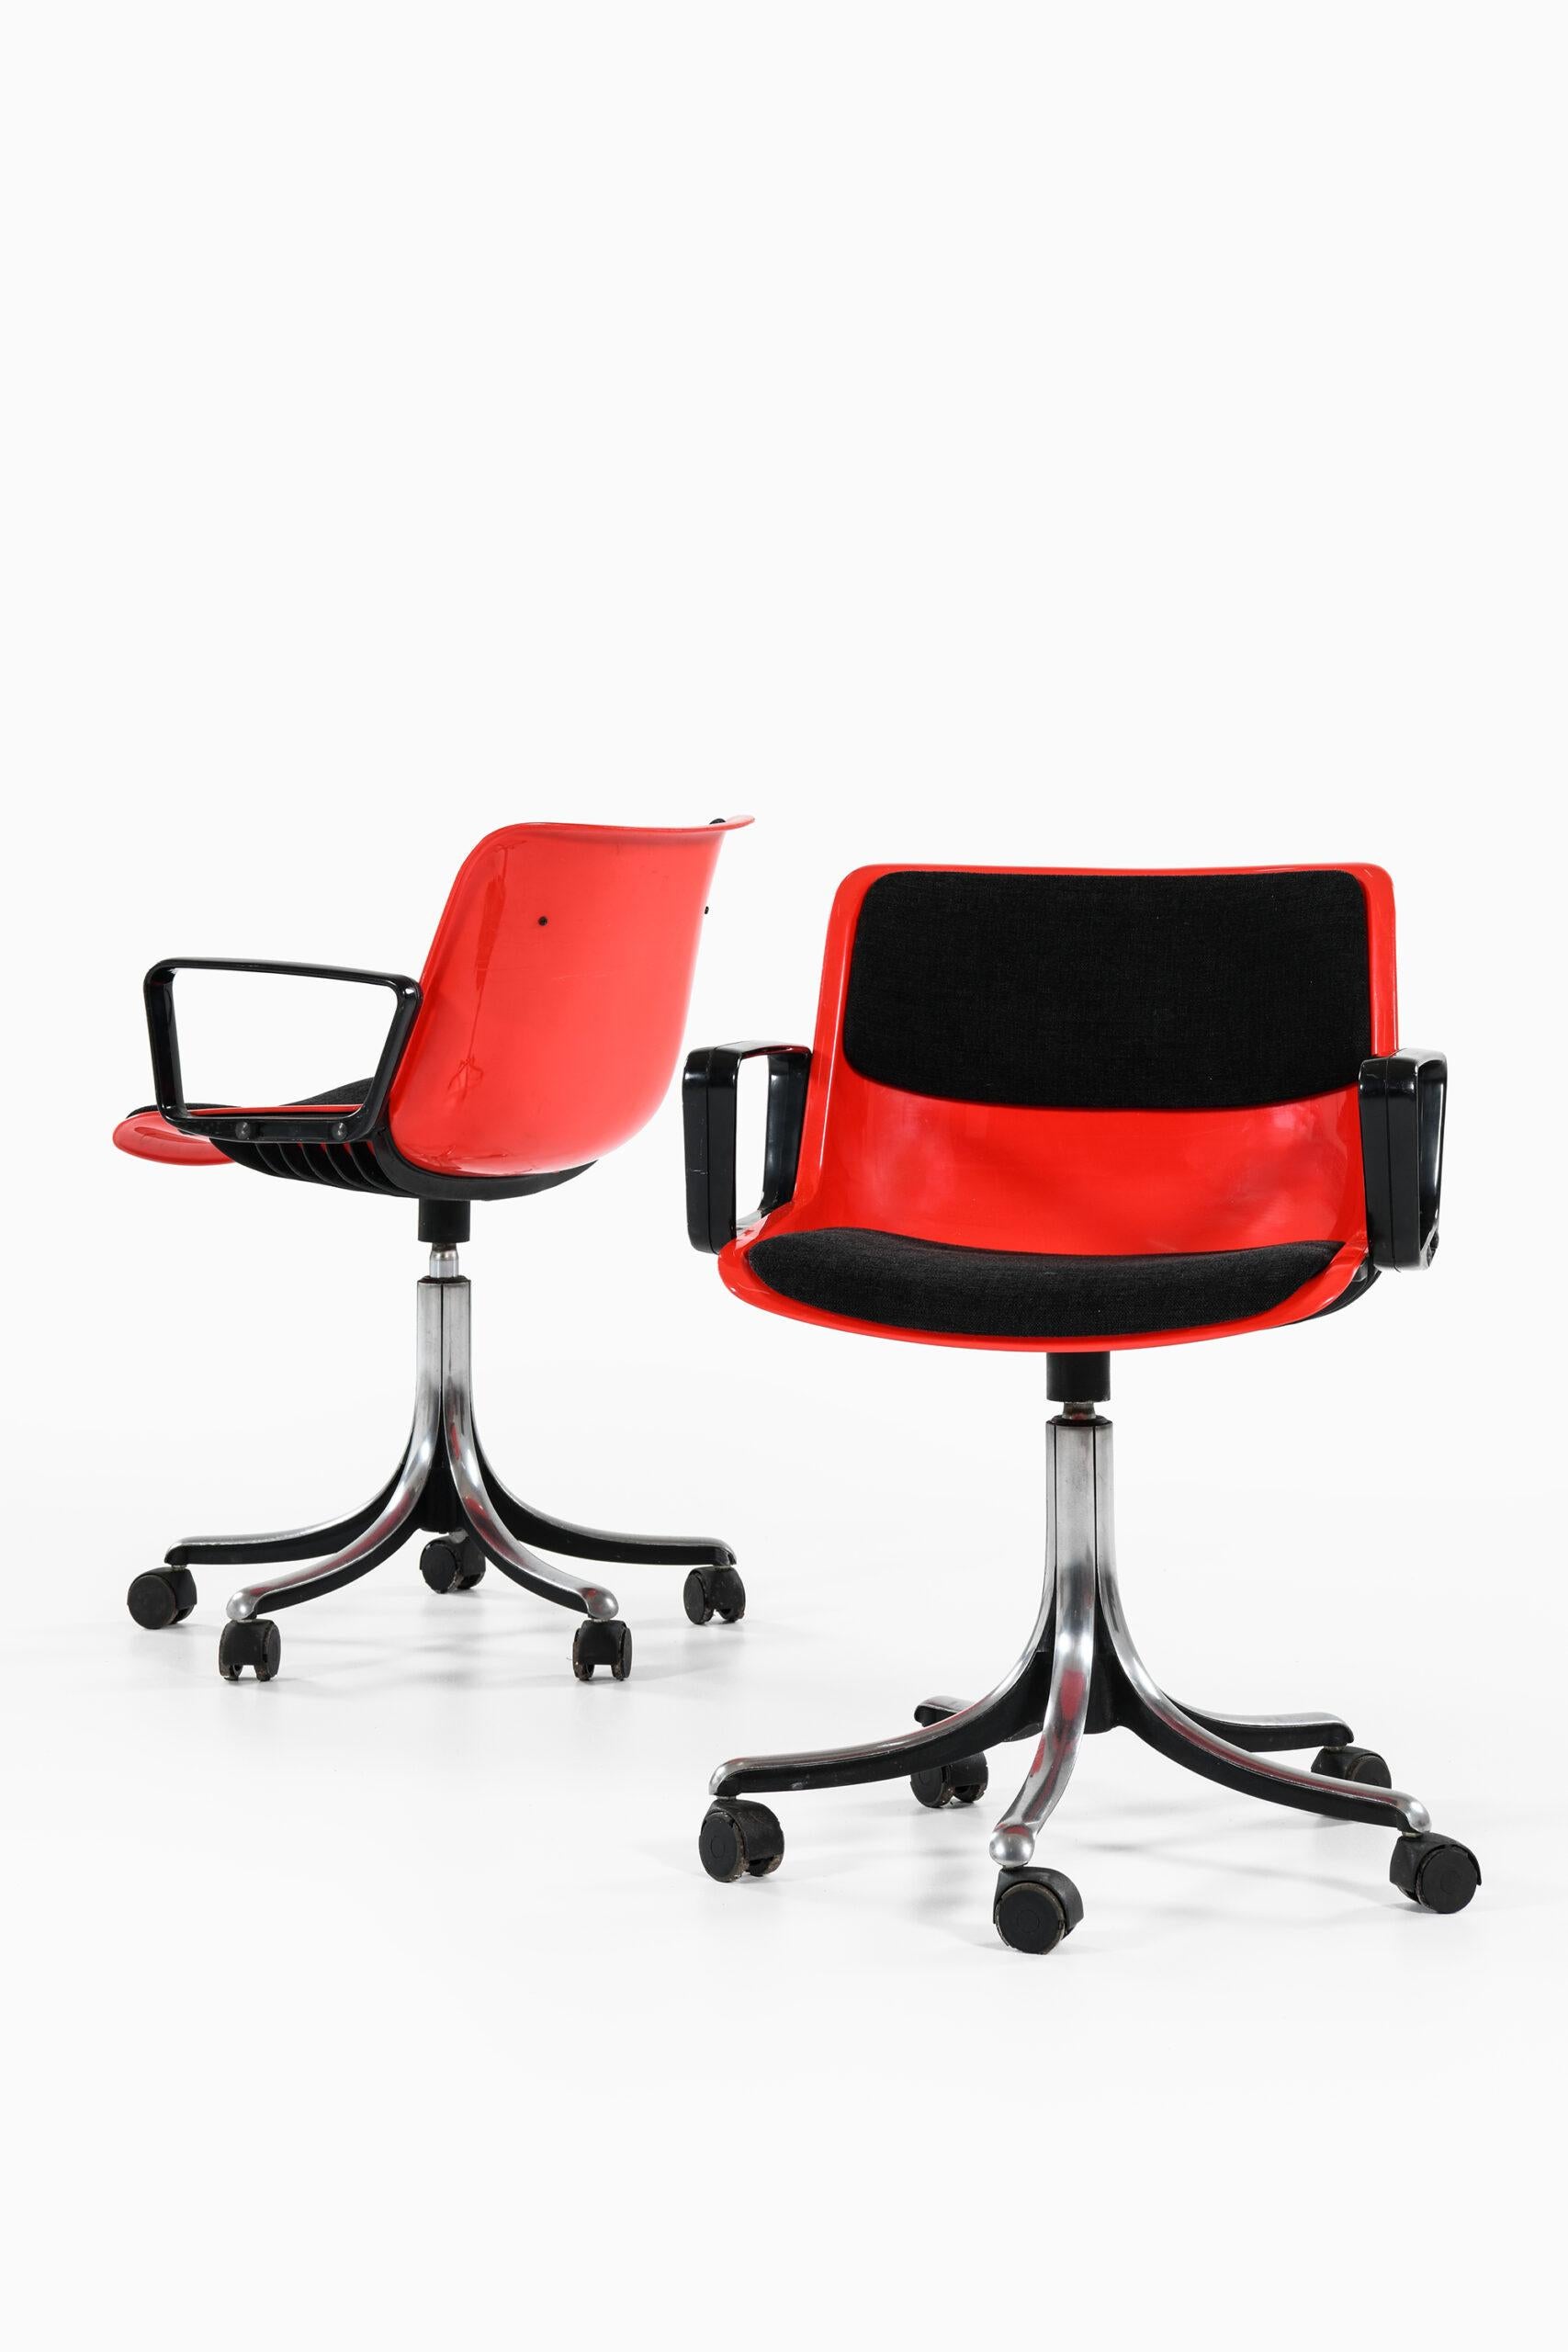 Osvaldo Borsani Office Chairs Model Modus Produced in Tecno in Italy 1